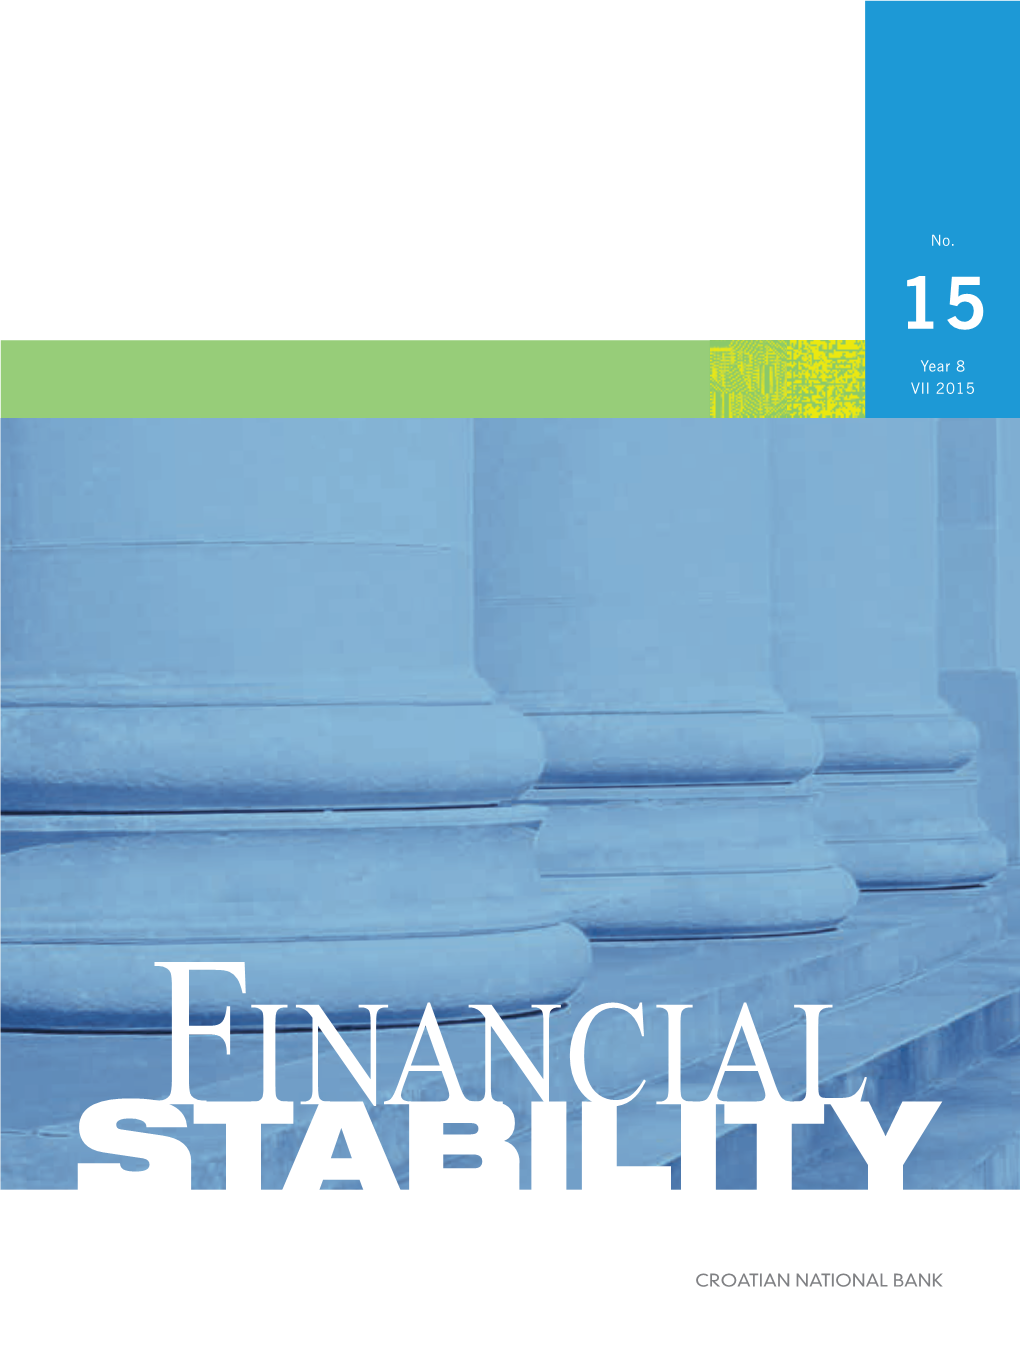 Financial Stability 15, July 2015